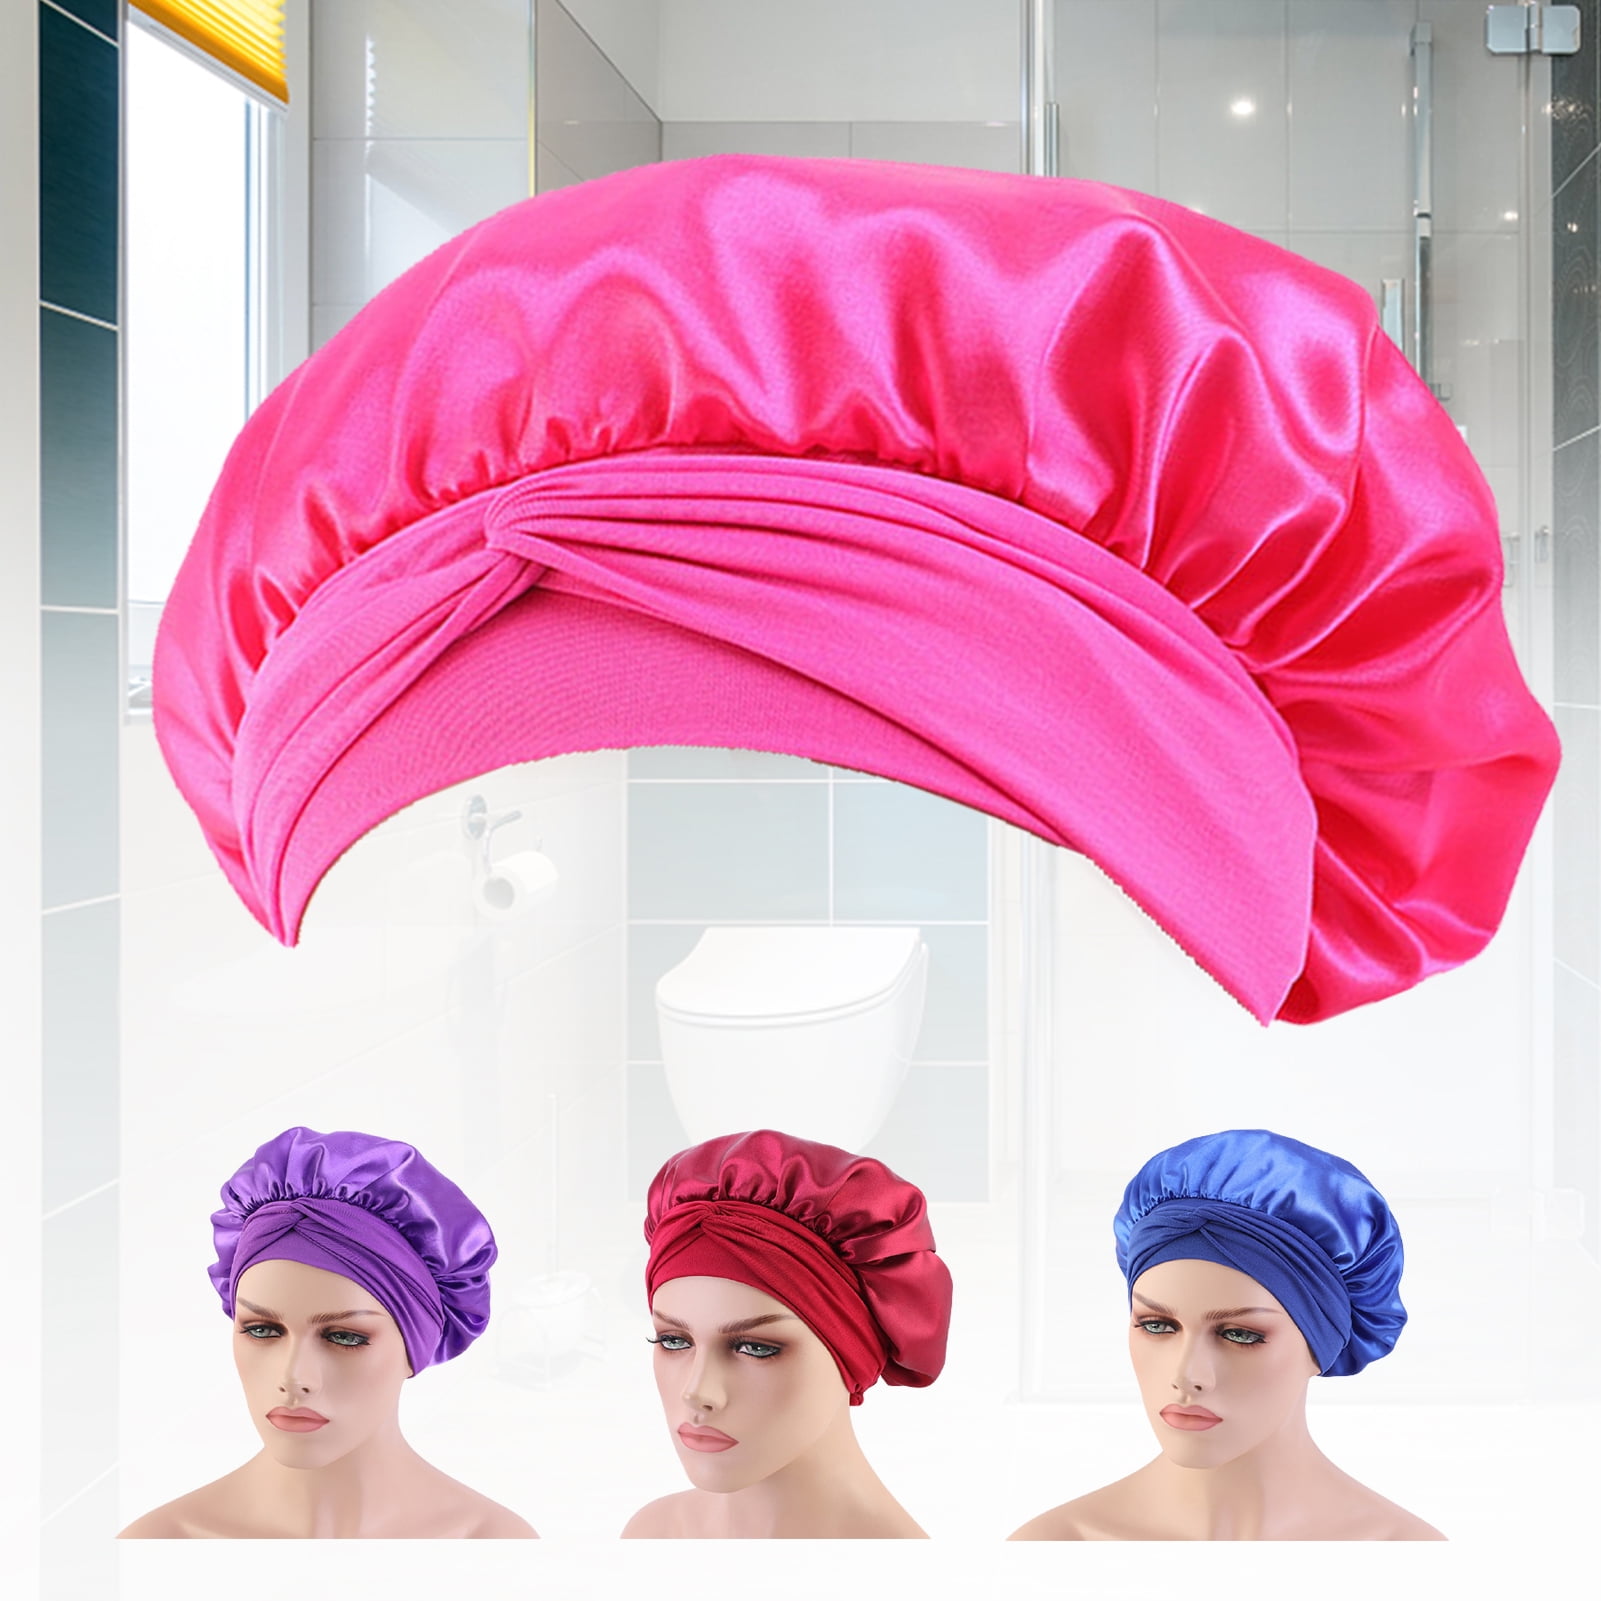 Cy SHWAILLT Big Satin Bonnet Silk Bonnet for Sleeping Satin Hair